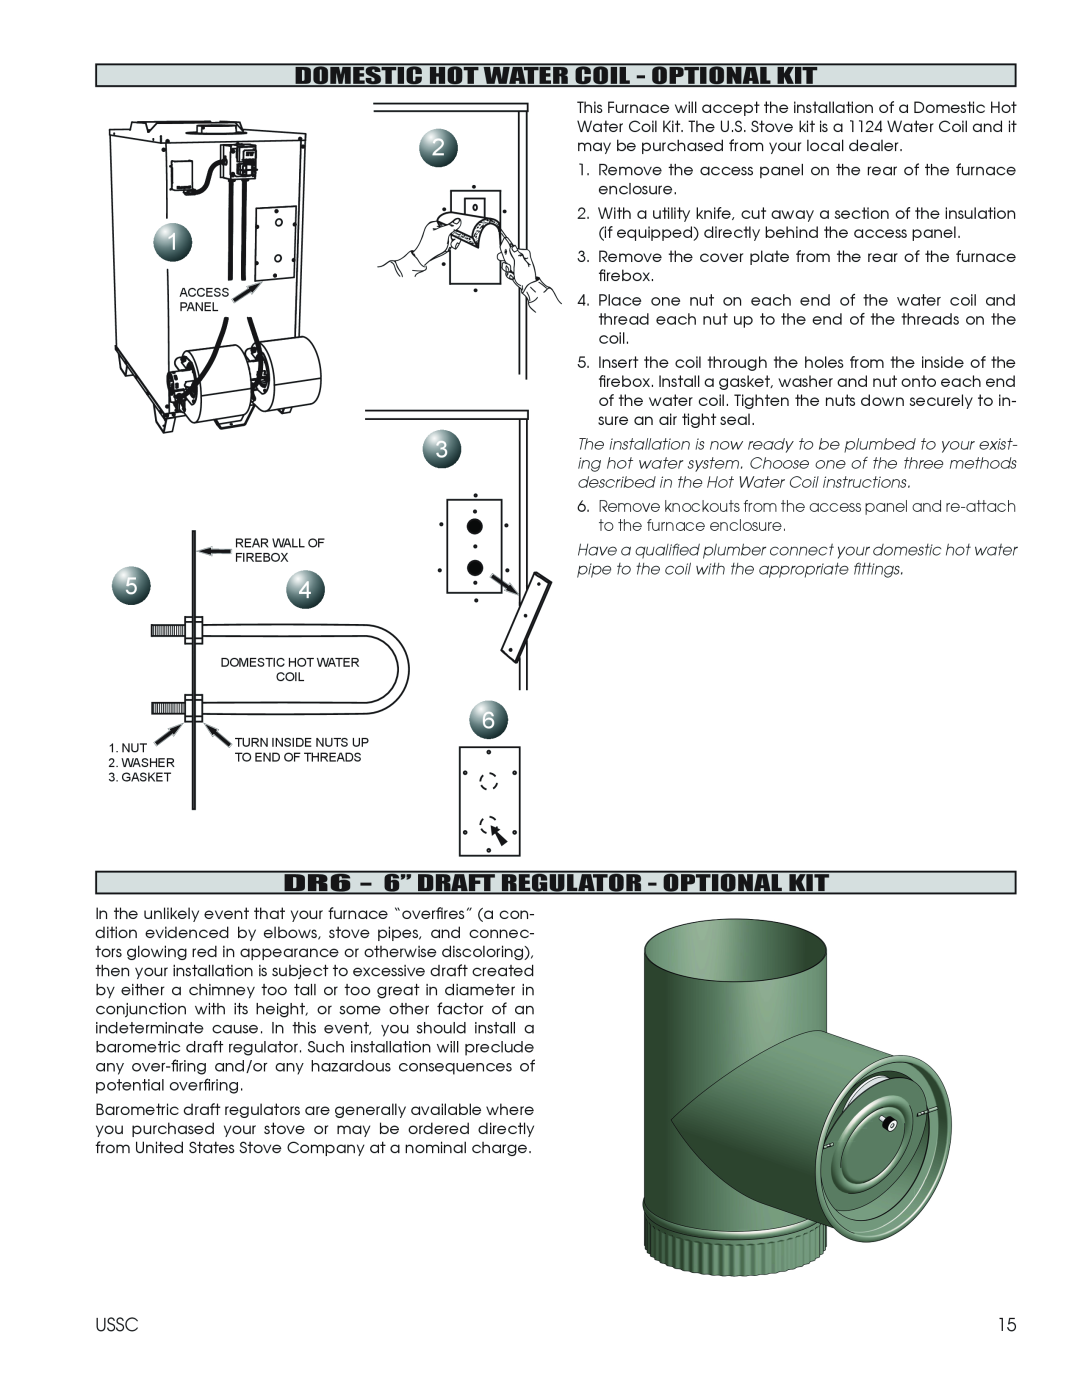 United States Stove 1602M Domestic Hot Water Coil - Optional Kit, DR6 - 6” DRAFT REGULATOR - OPTIONAL KIT, Ussc 